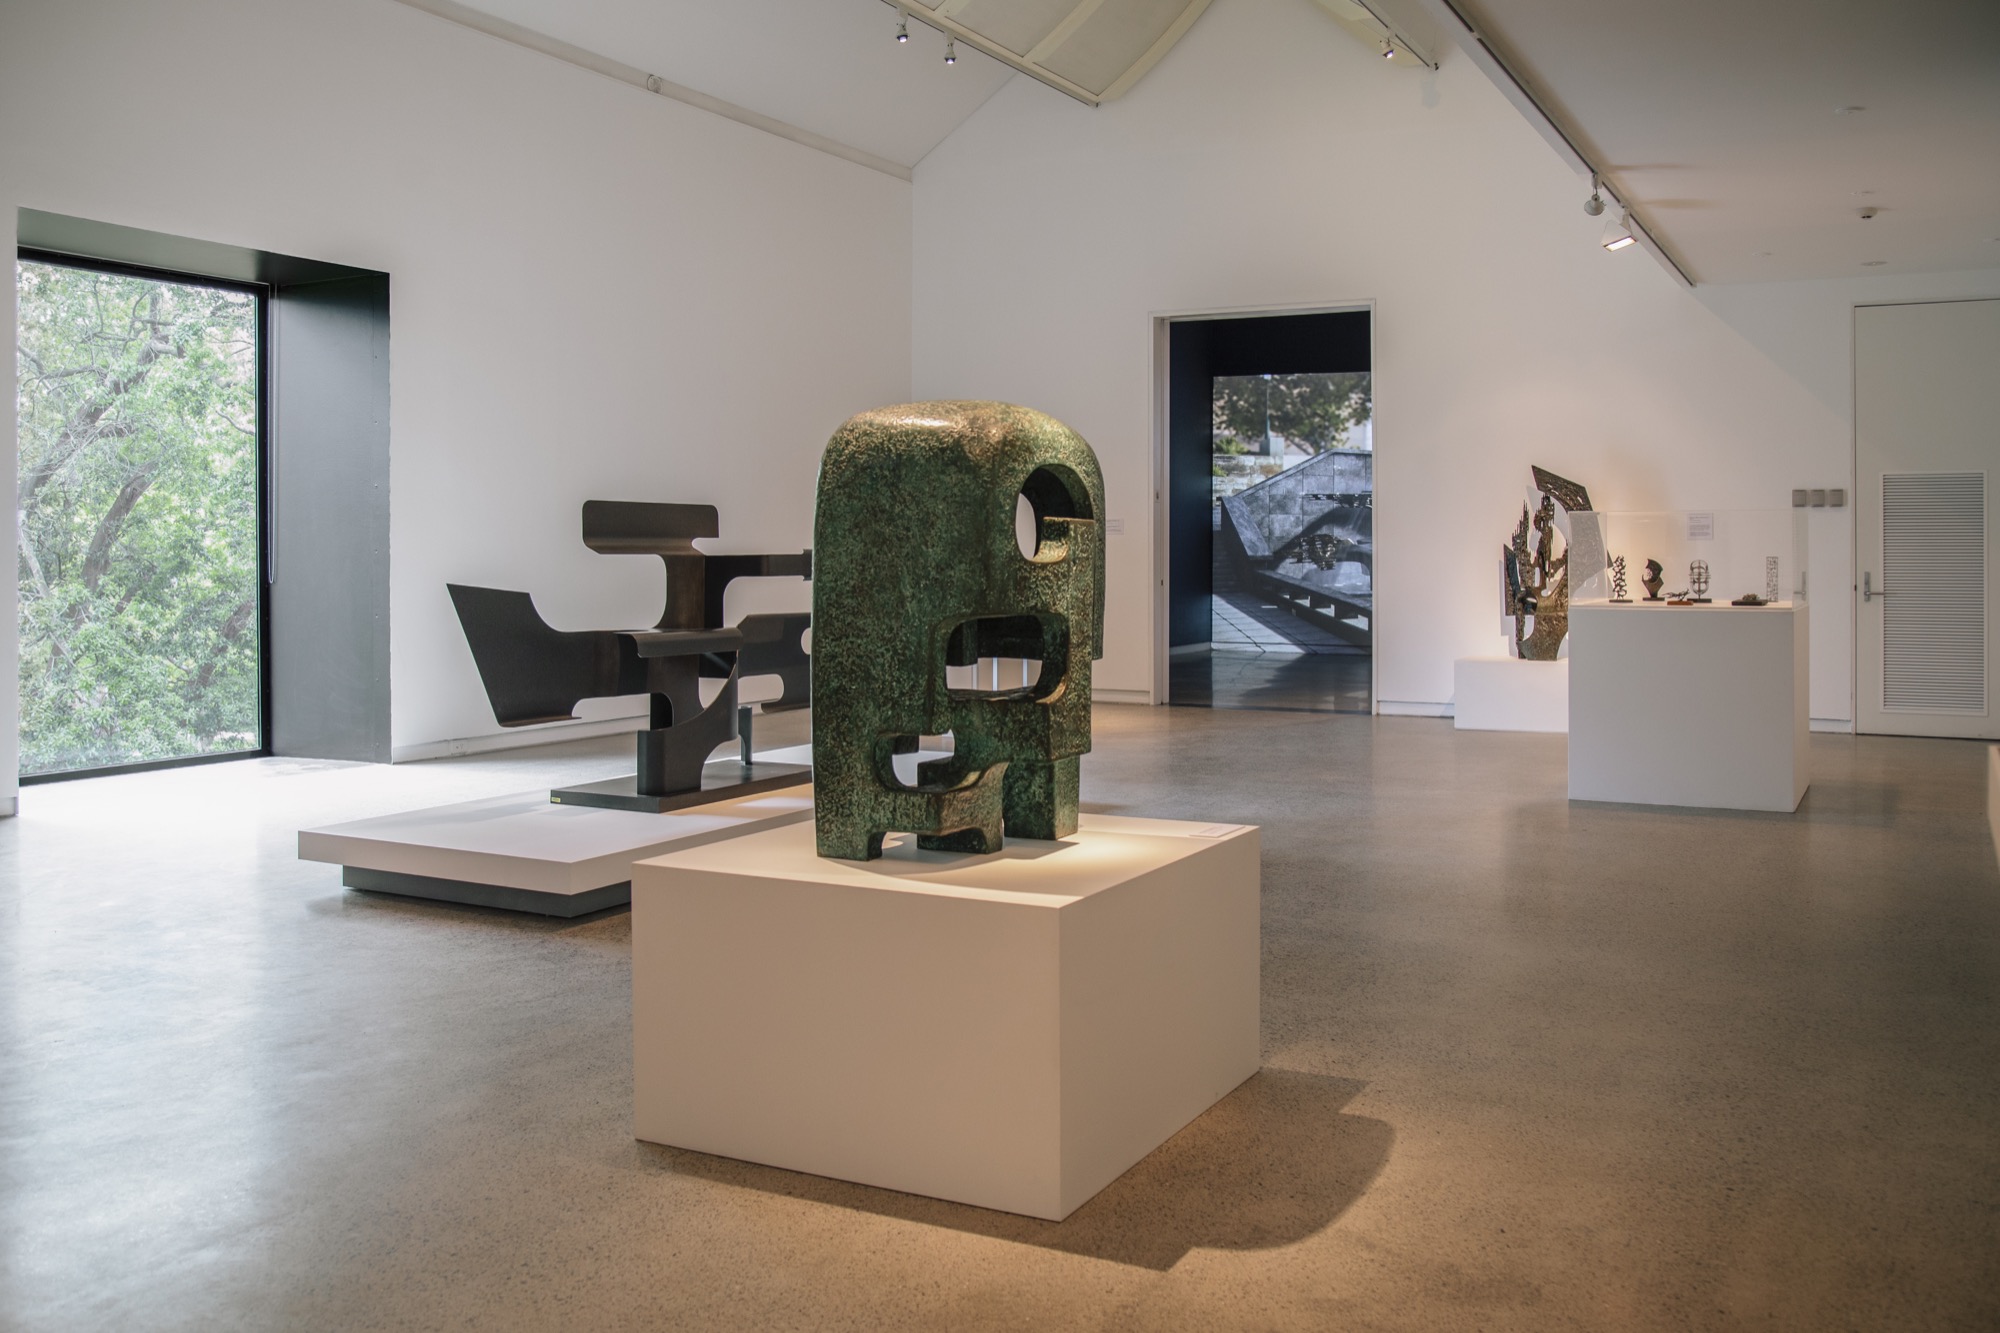 Installation view, Margel Hinder: Modern in Motion, Heide Museum of Modern Art, with Hinder’s <em>Green Garden Sculpture</em> (1972) and <em>Black Silhouette</em> (1979), and beyond, in the far room, Andrew Yip’s <em>Margel Hinder Immersive II (Civic Park)</em> (2020).